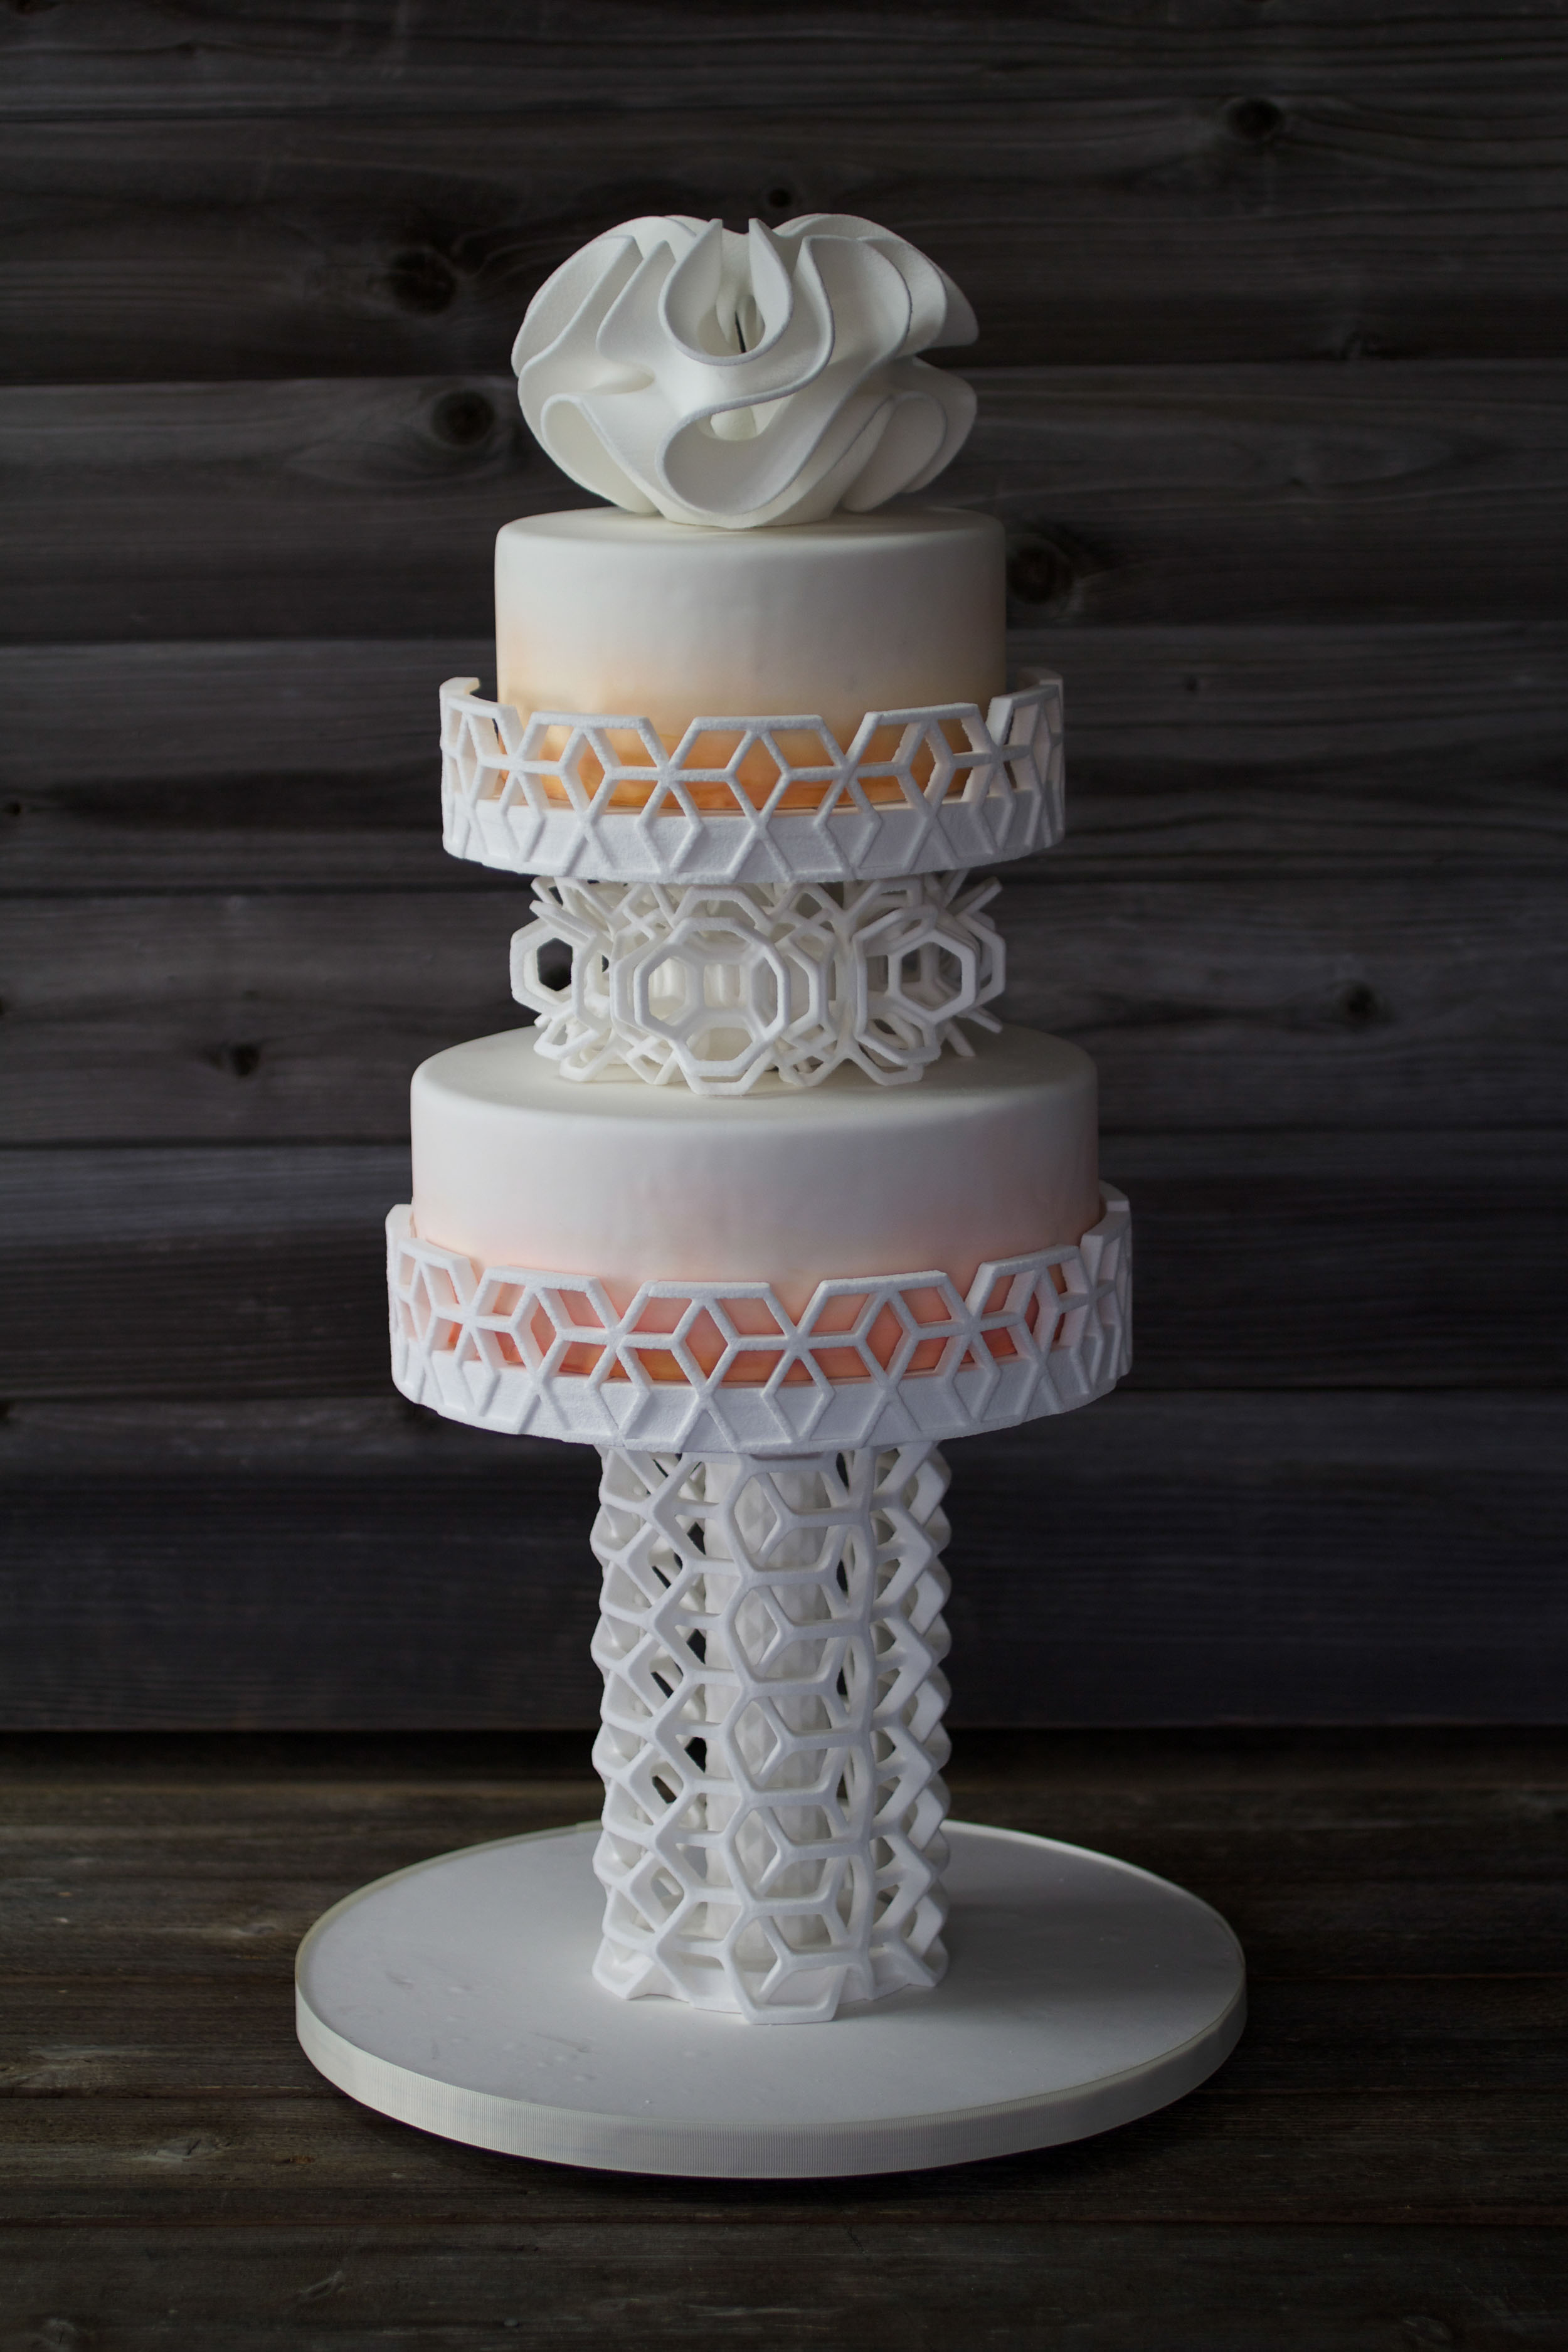 3D Printed Wedding Cake